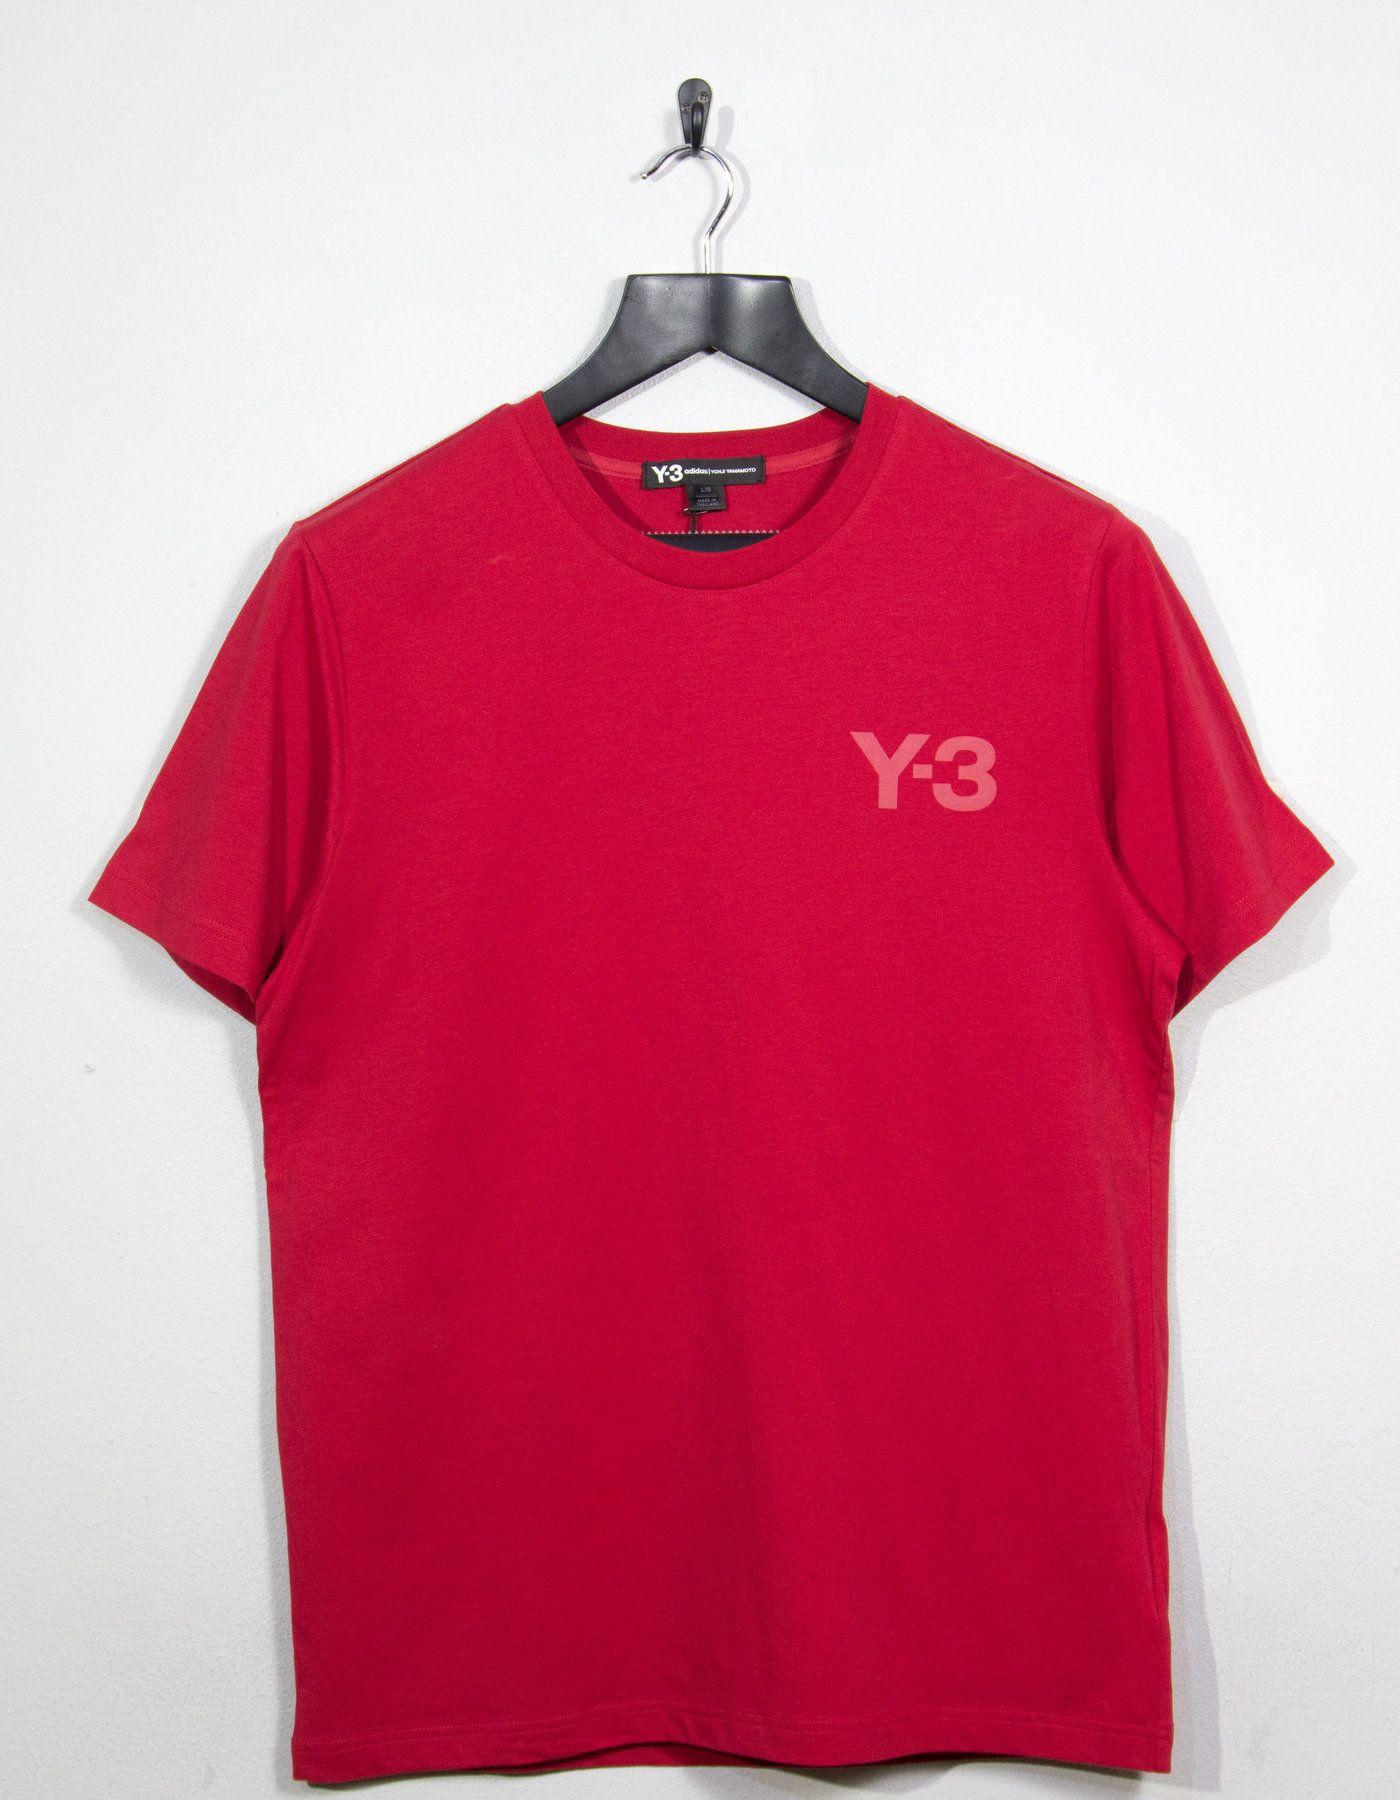 Red and White Y Logo - Adidas y-3 classic logo t-shirt red | Manifesto